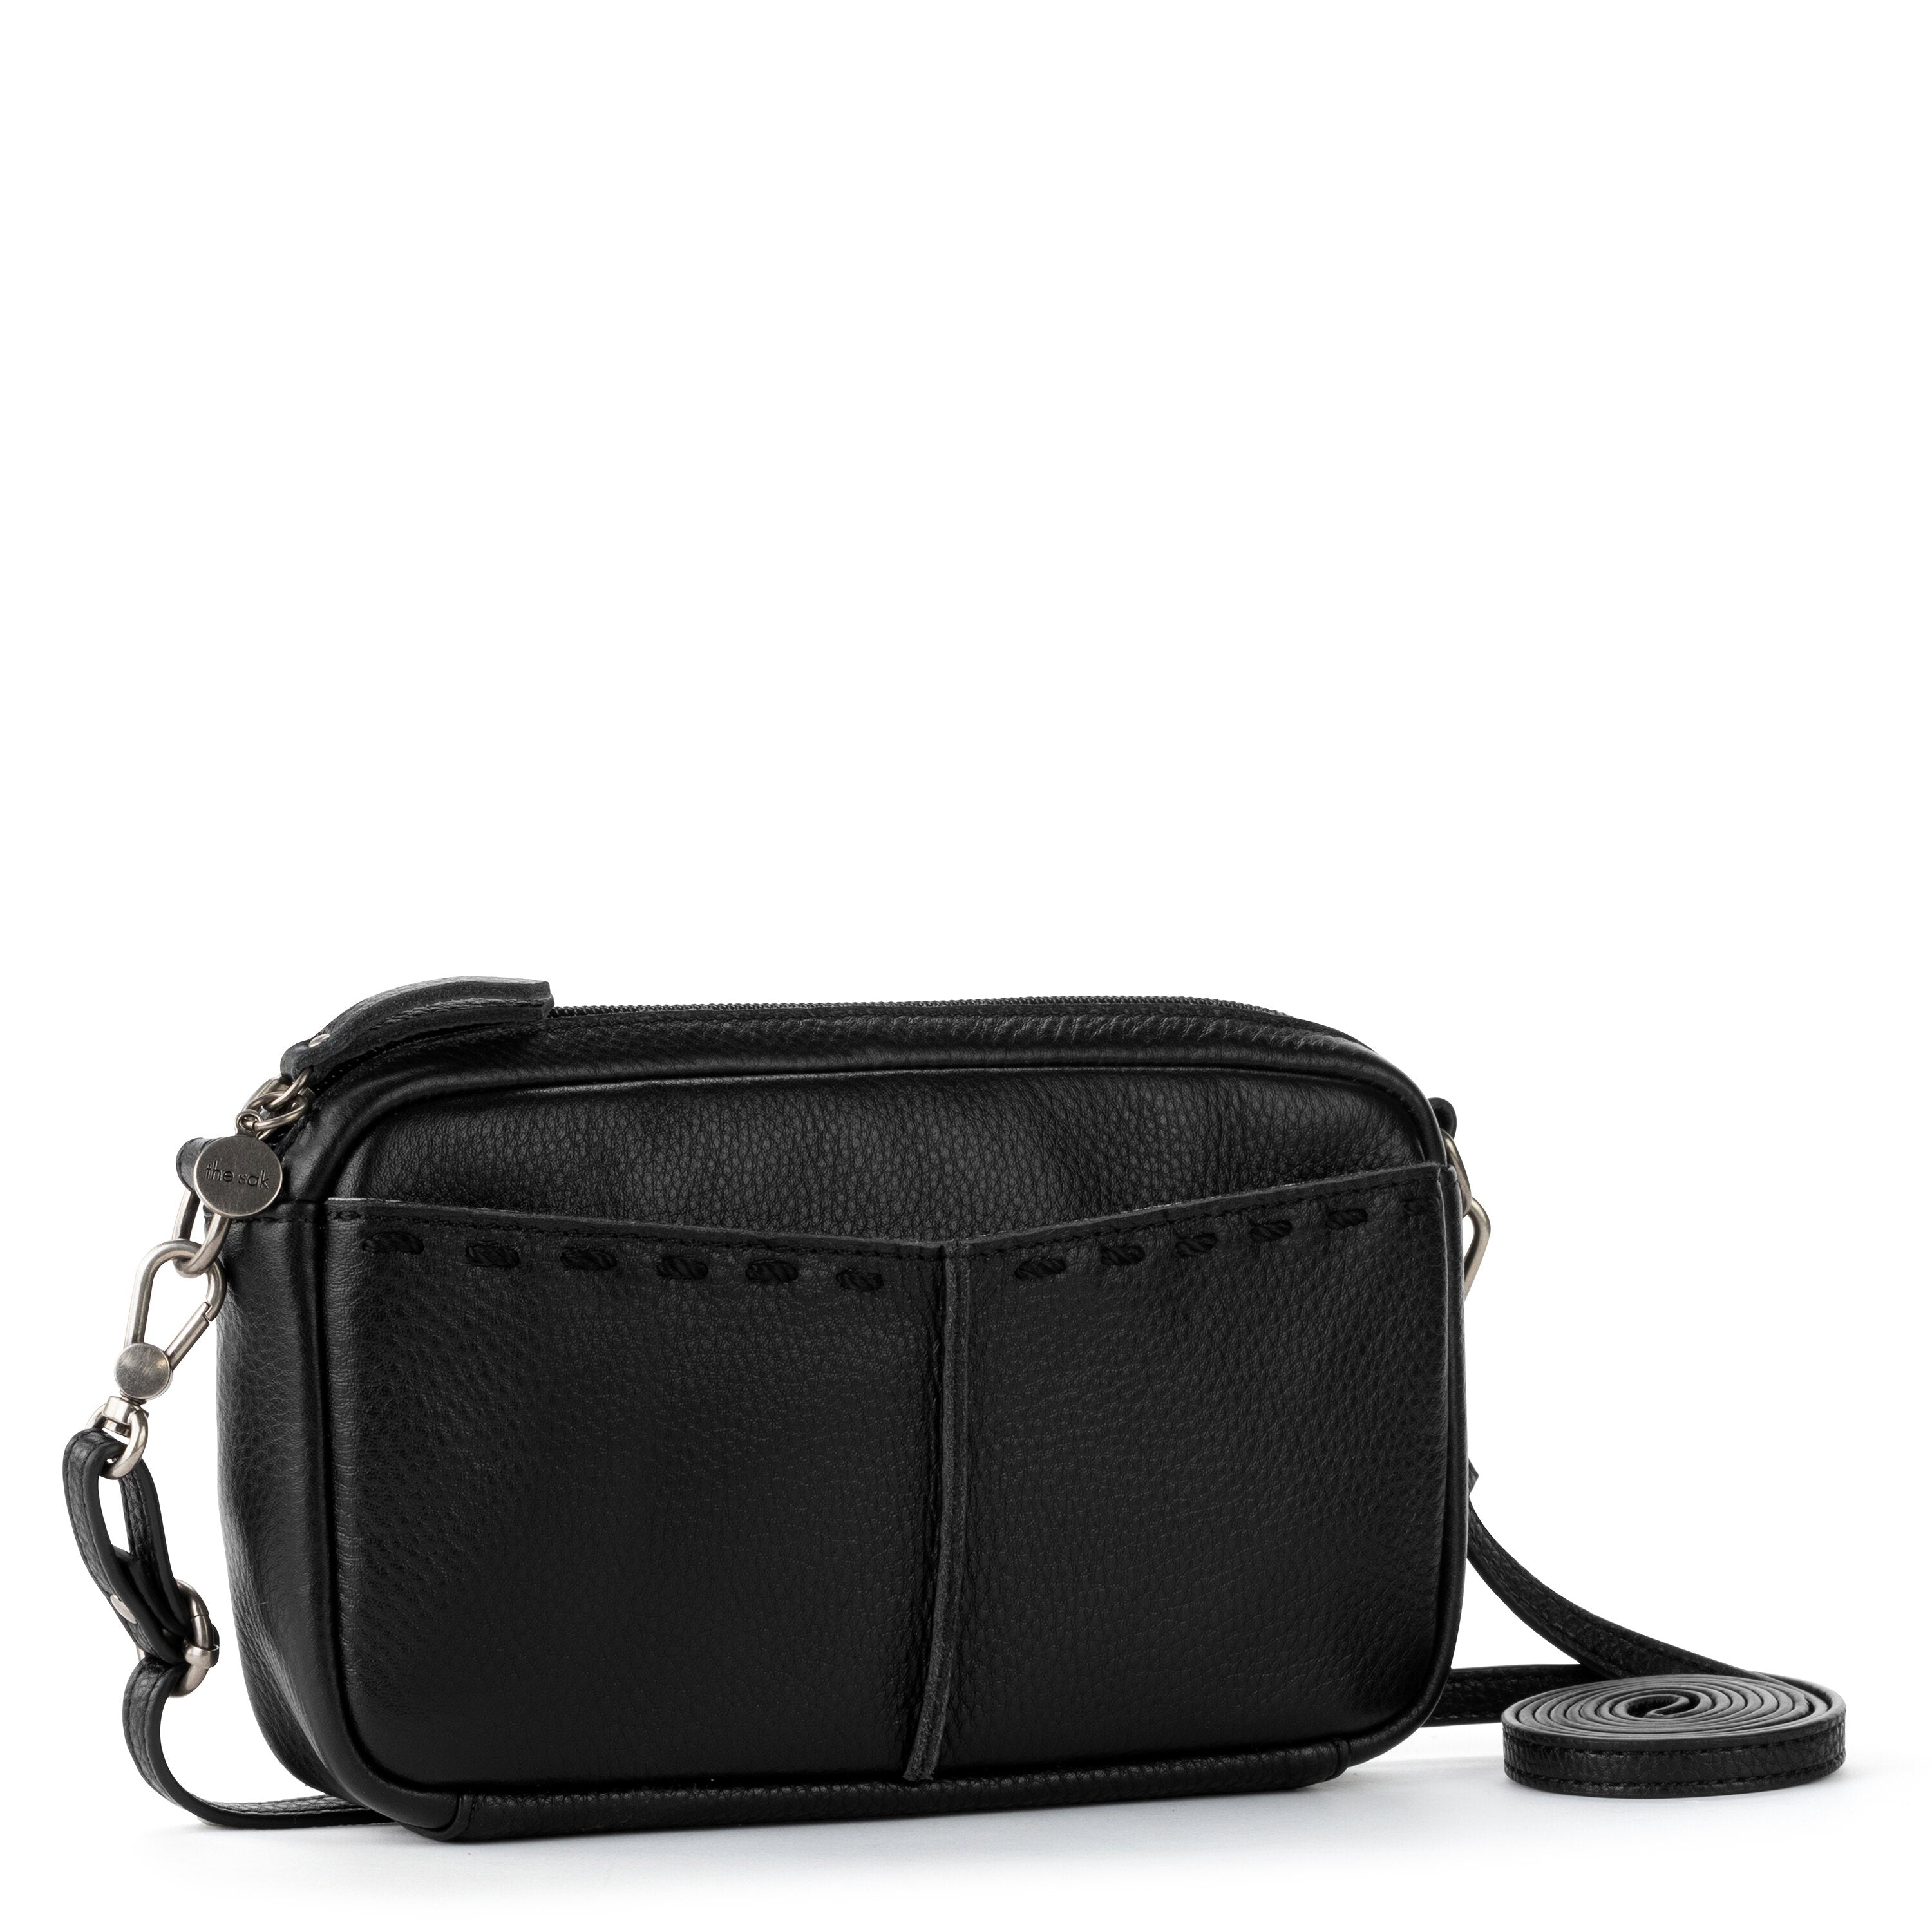 The Sak Essential Leather Zip Wallet, Black